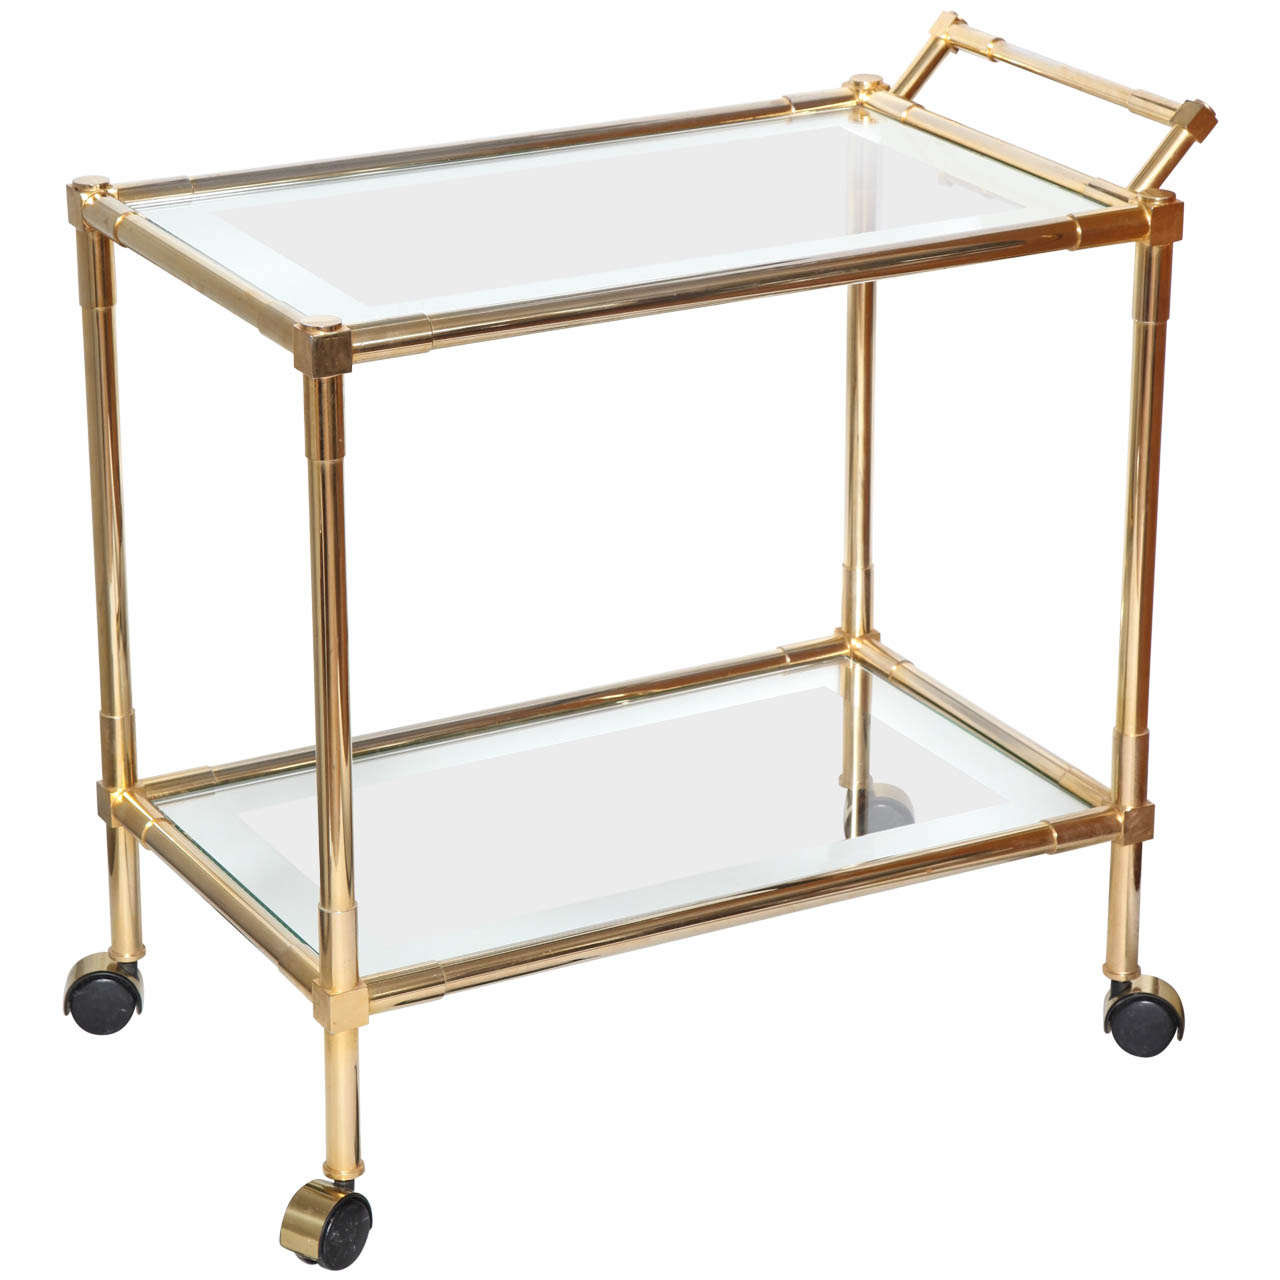 Brass and Glass Mid-Century Bar Cart